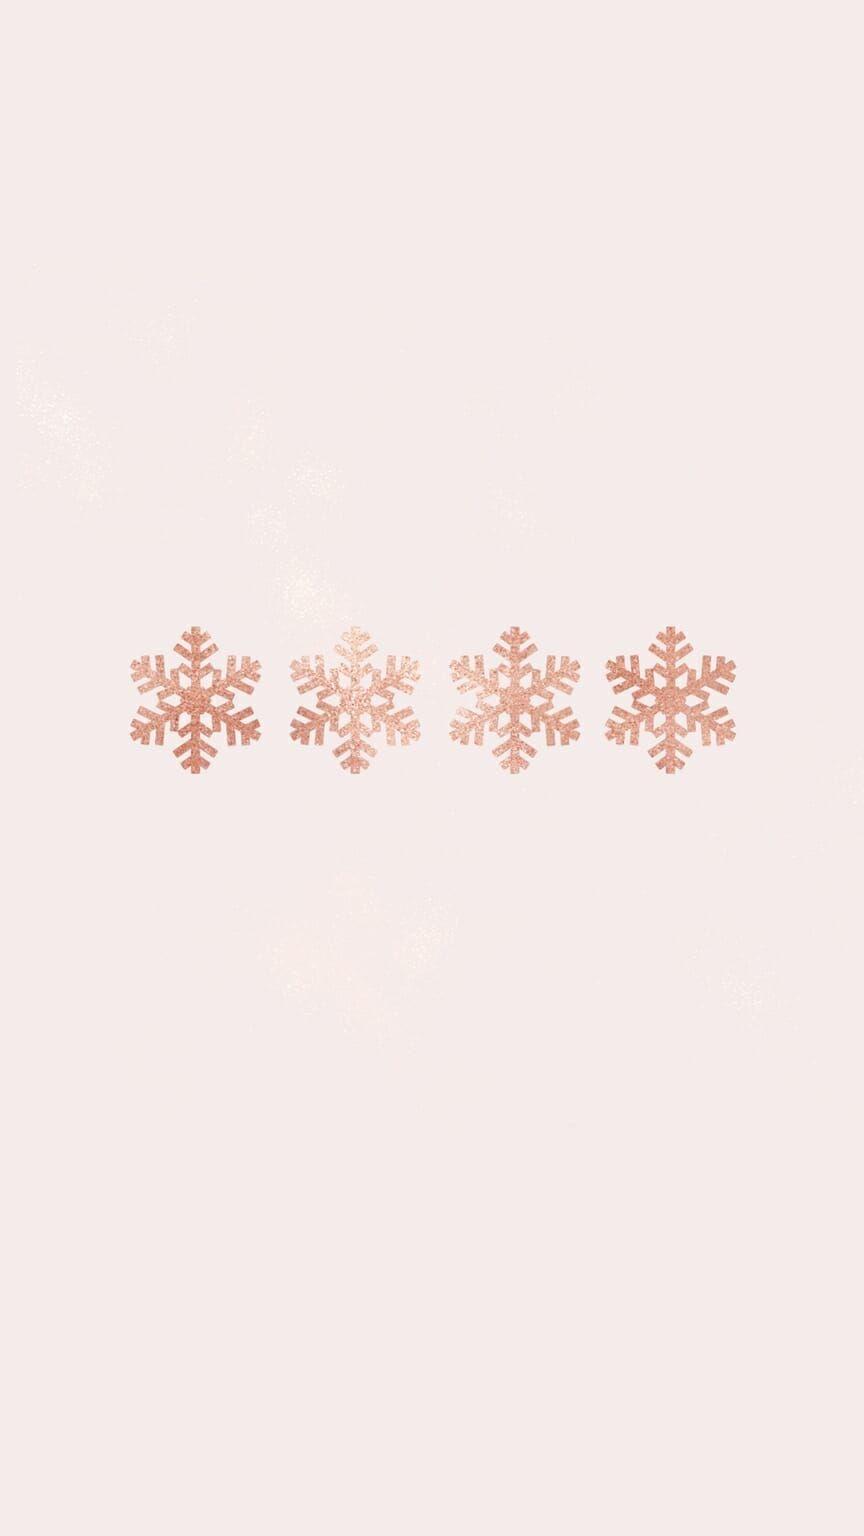 864x1536 Aesthetic Pink Christmas Wallpaper